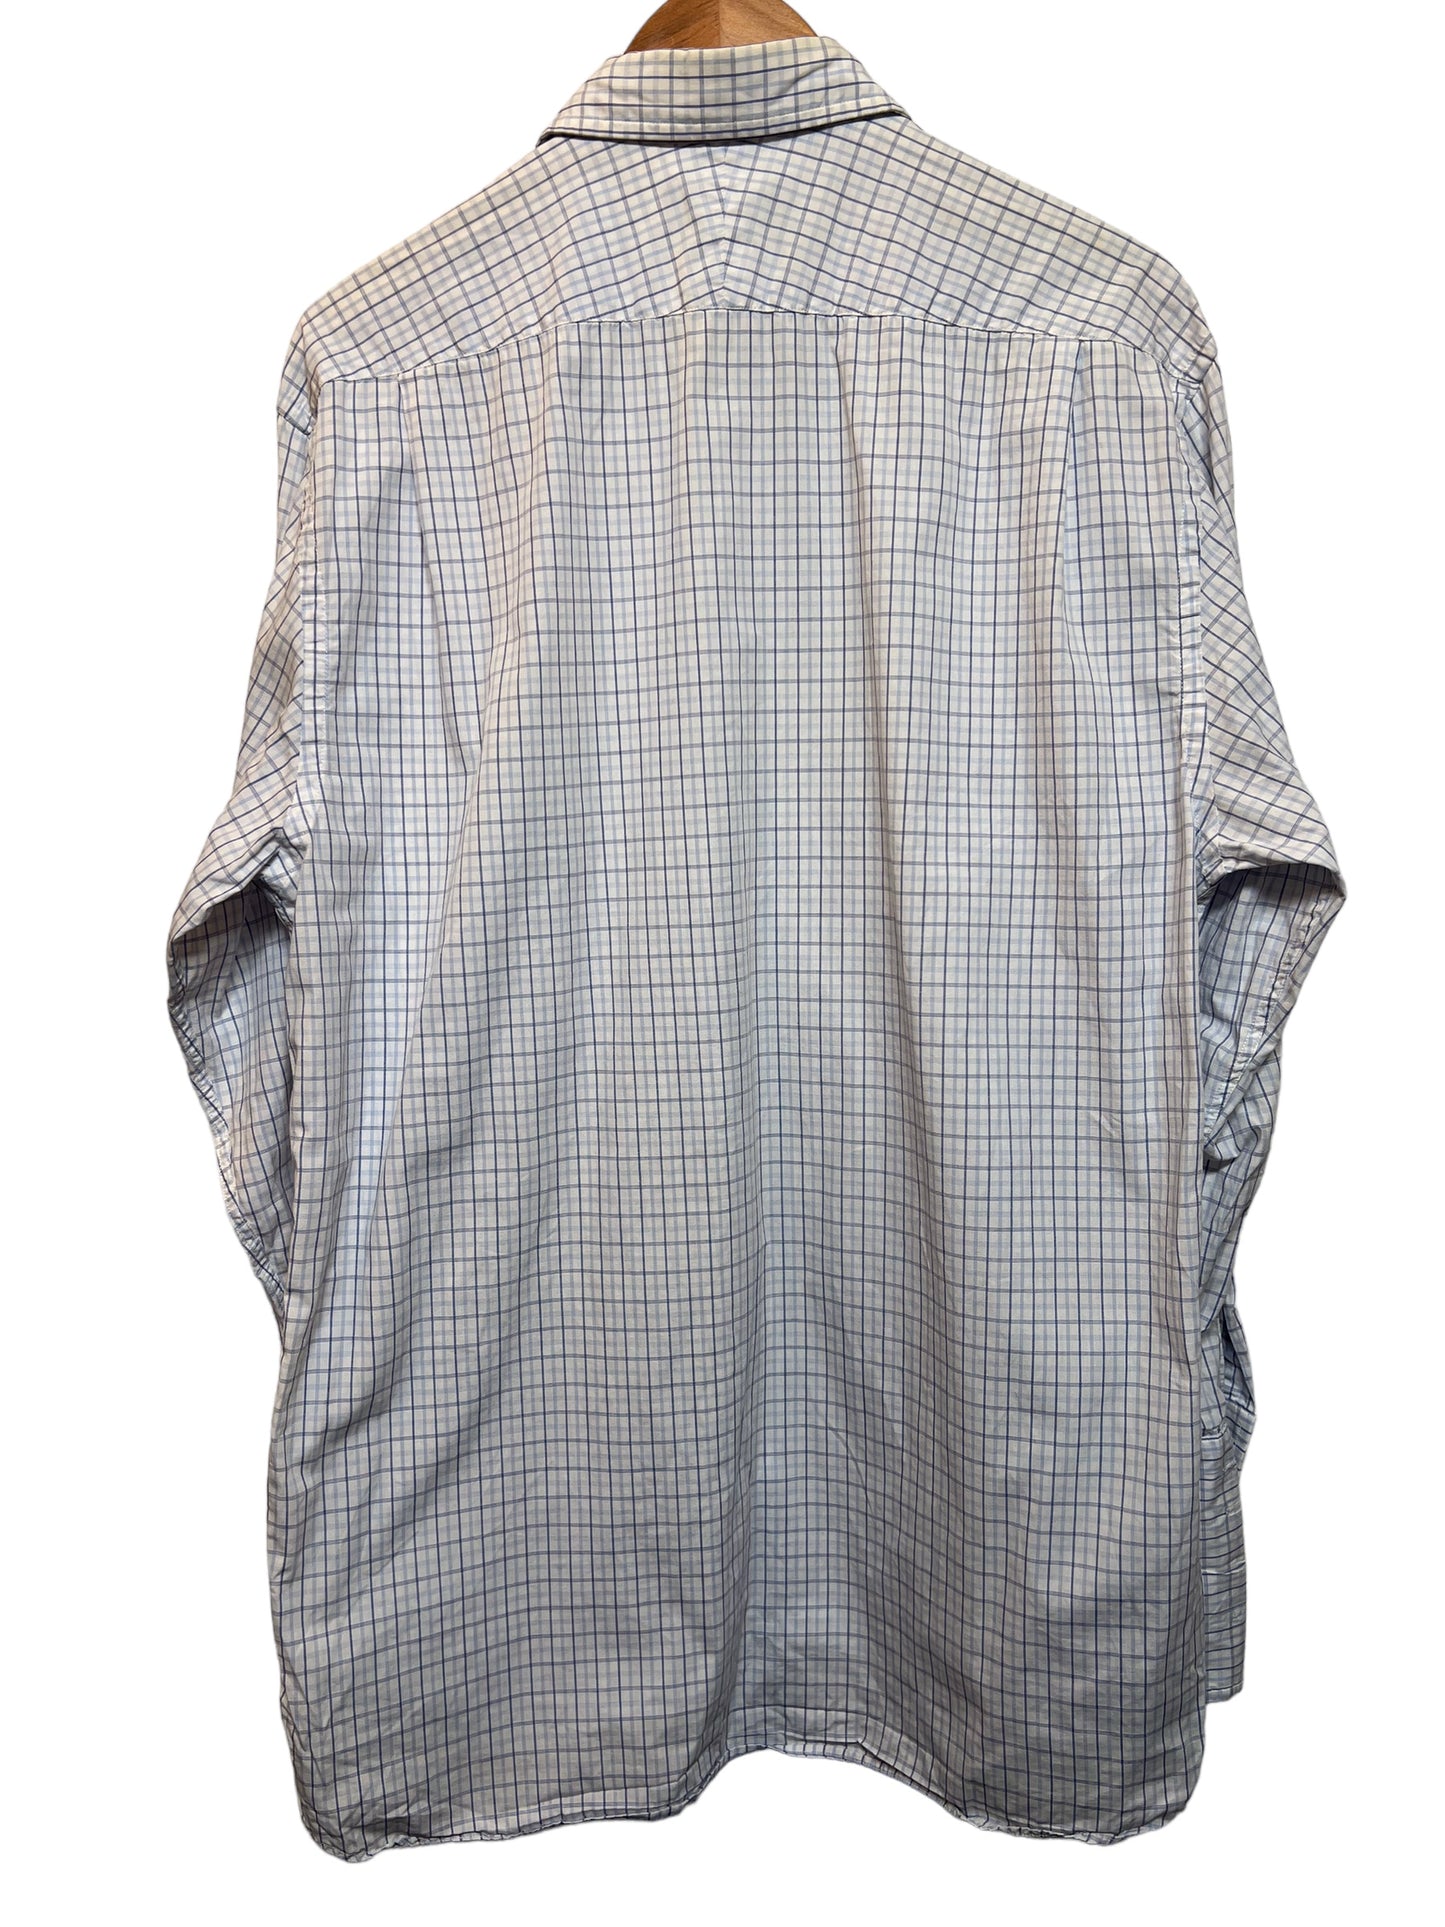 Maine England Men’s Formal Long Sleeve Shirt (Size XL)